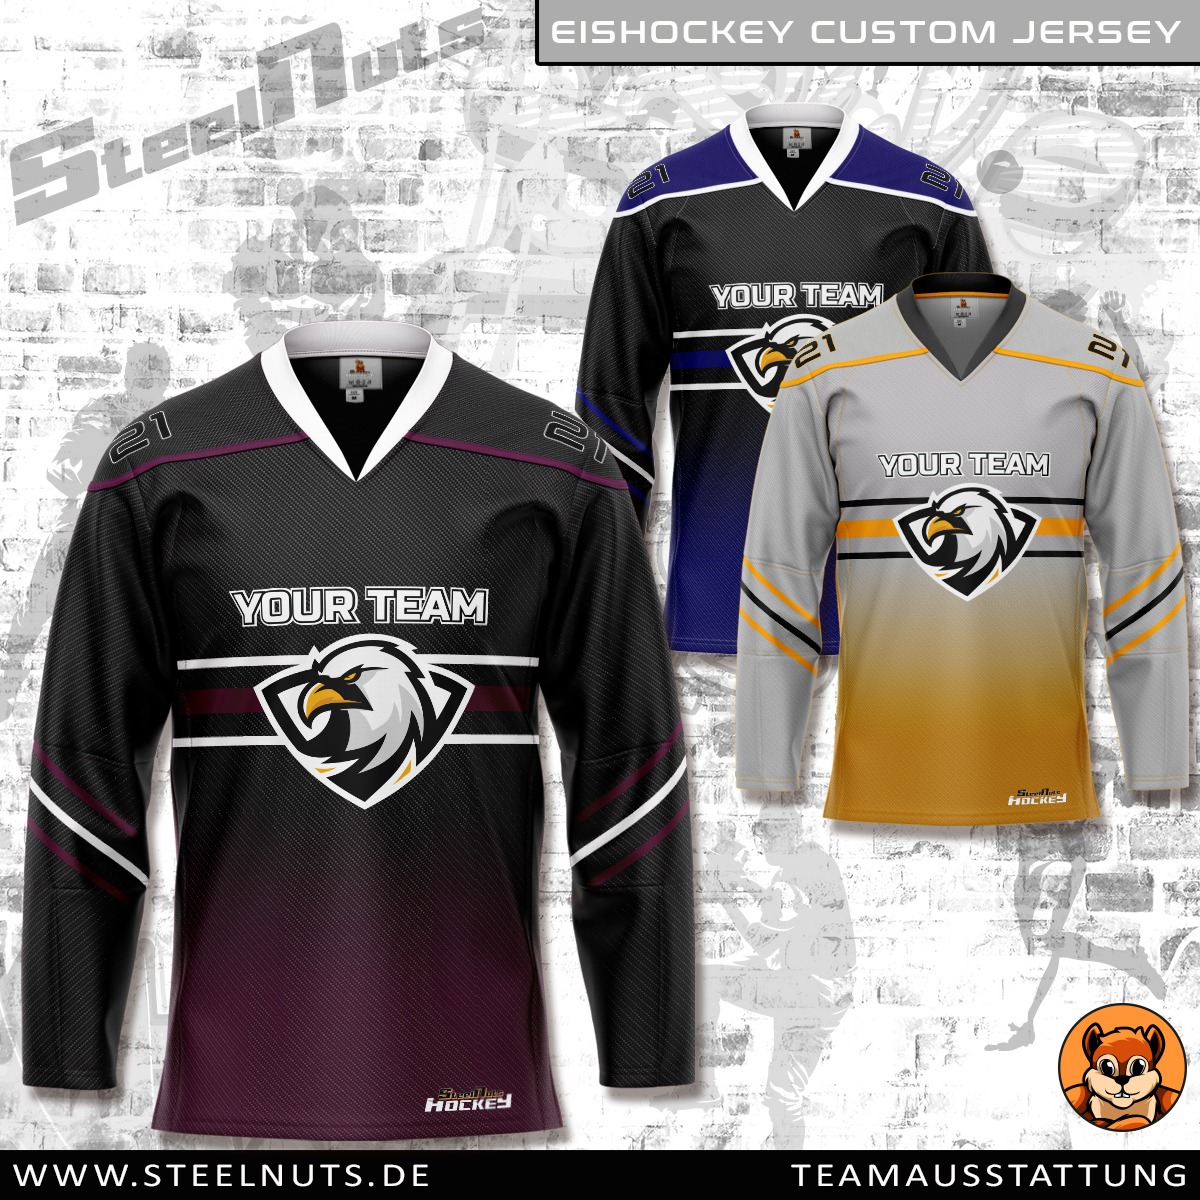 Steelnuts_Eishockey Custom Jersey